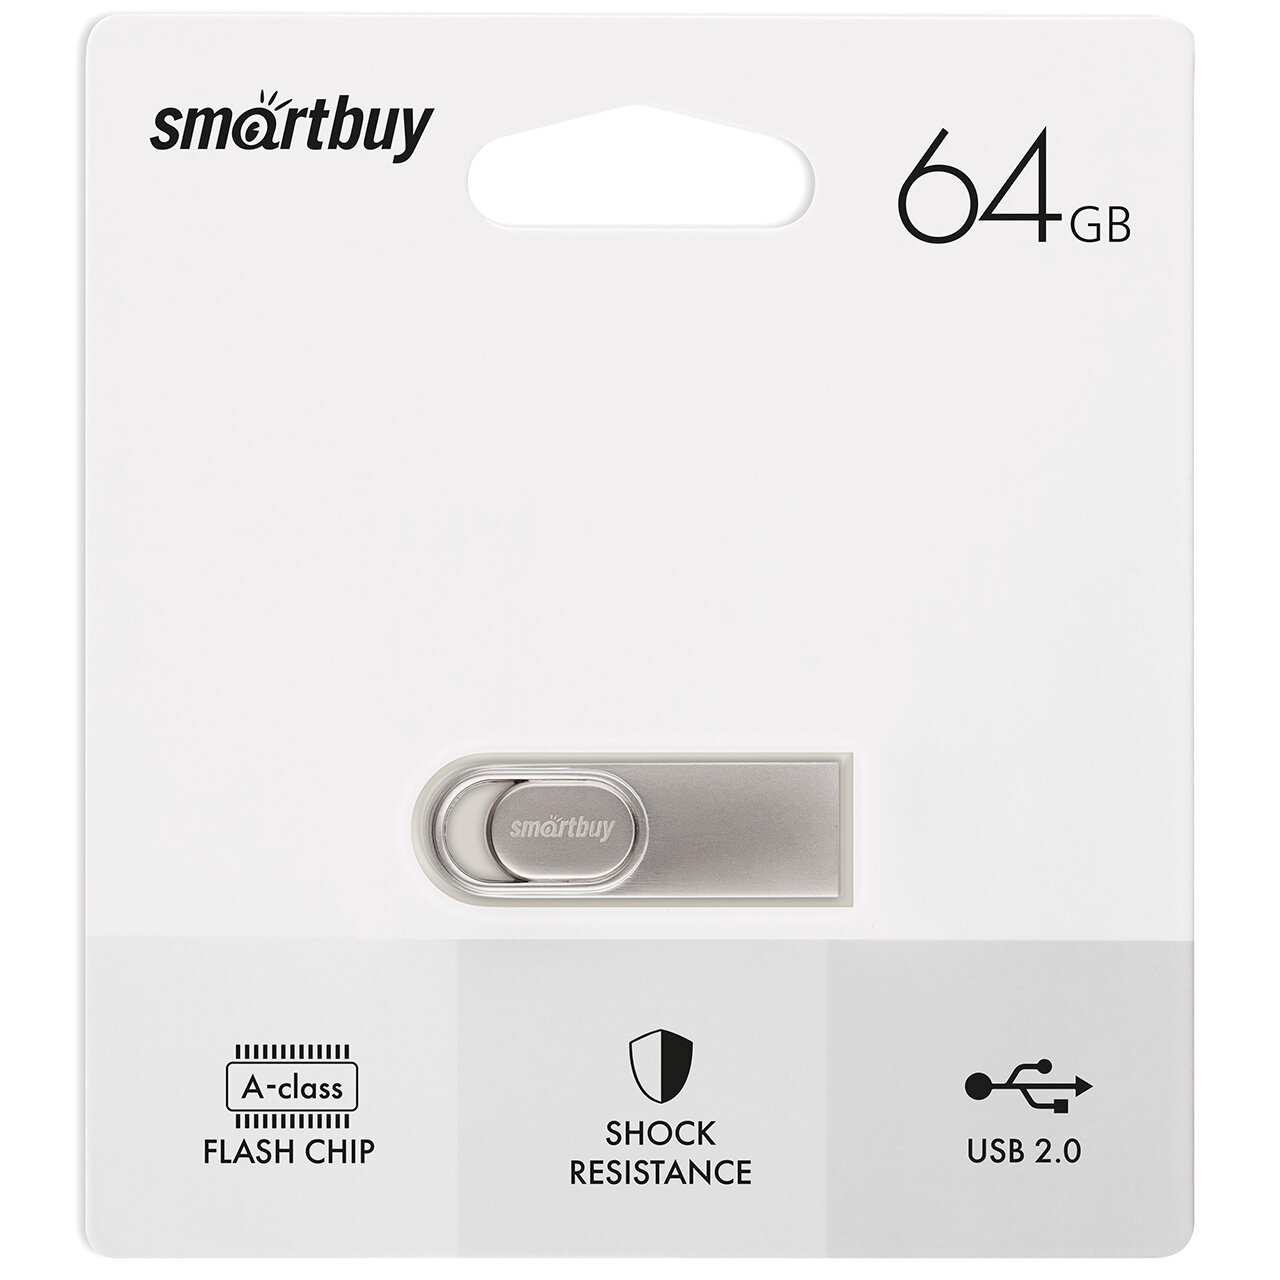 SB64GBM3, 64GB USB 2.0, Metal, SmartBuy